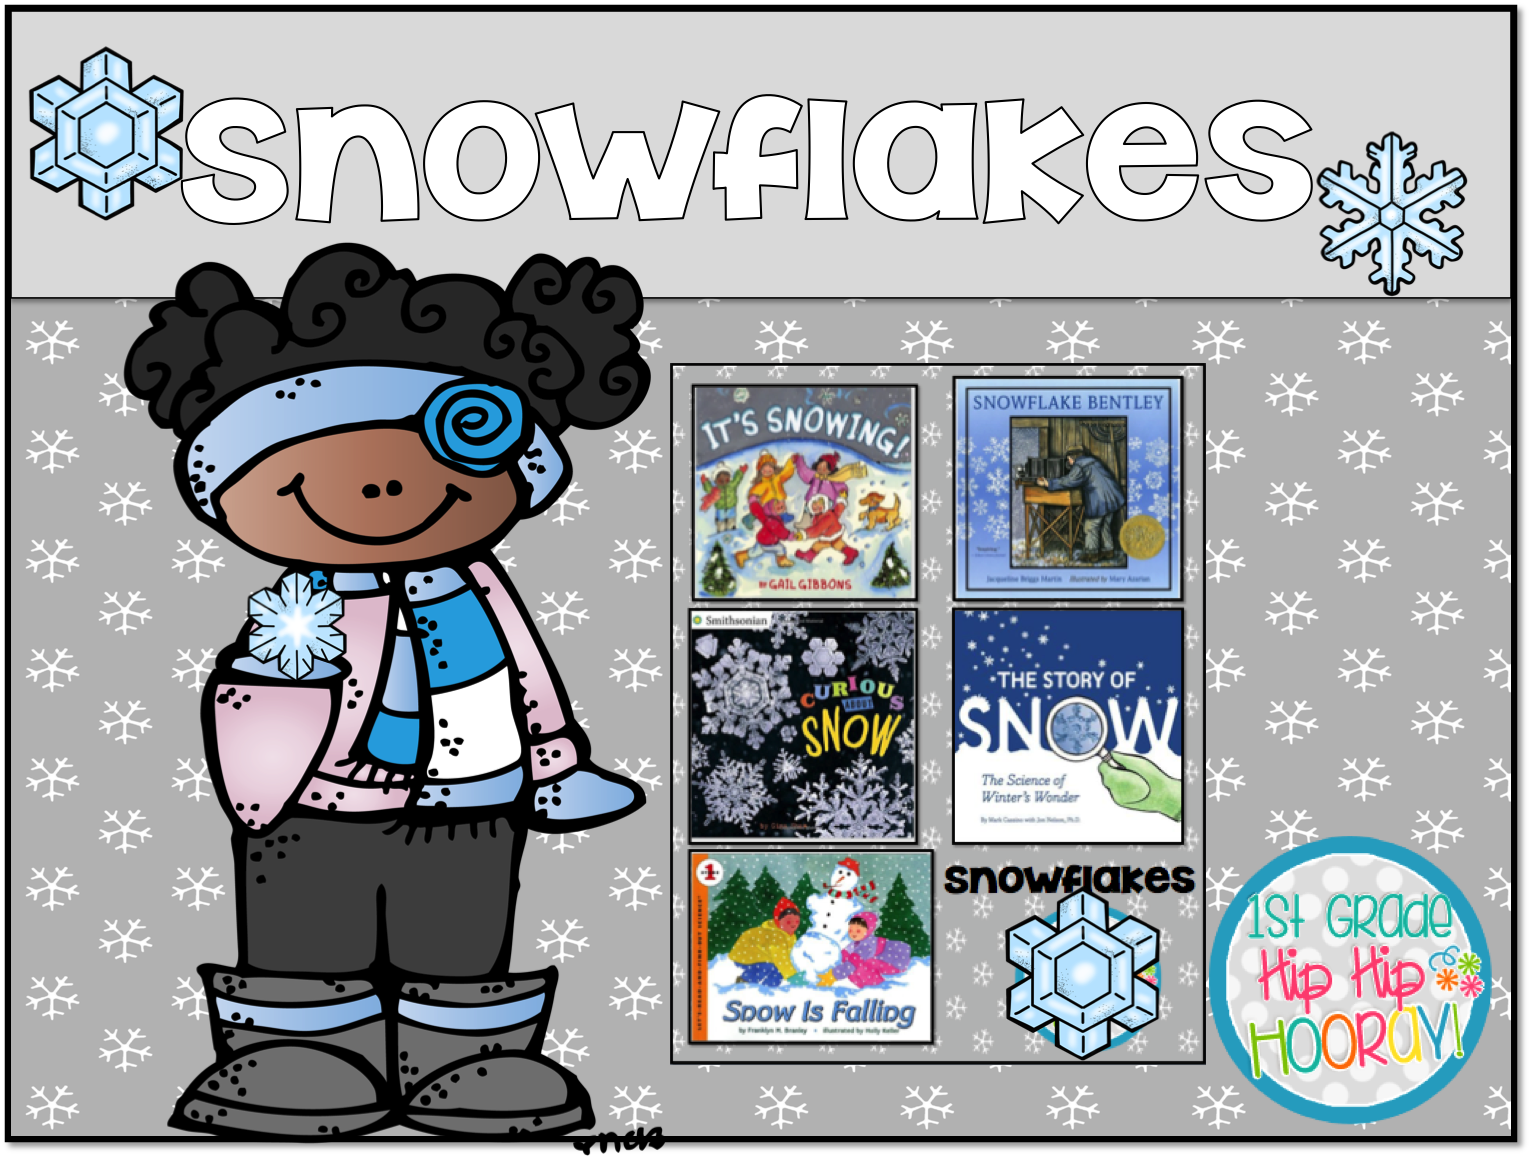 1st Grade Hip Hip Hooray!: Snowflakes